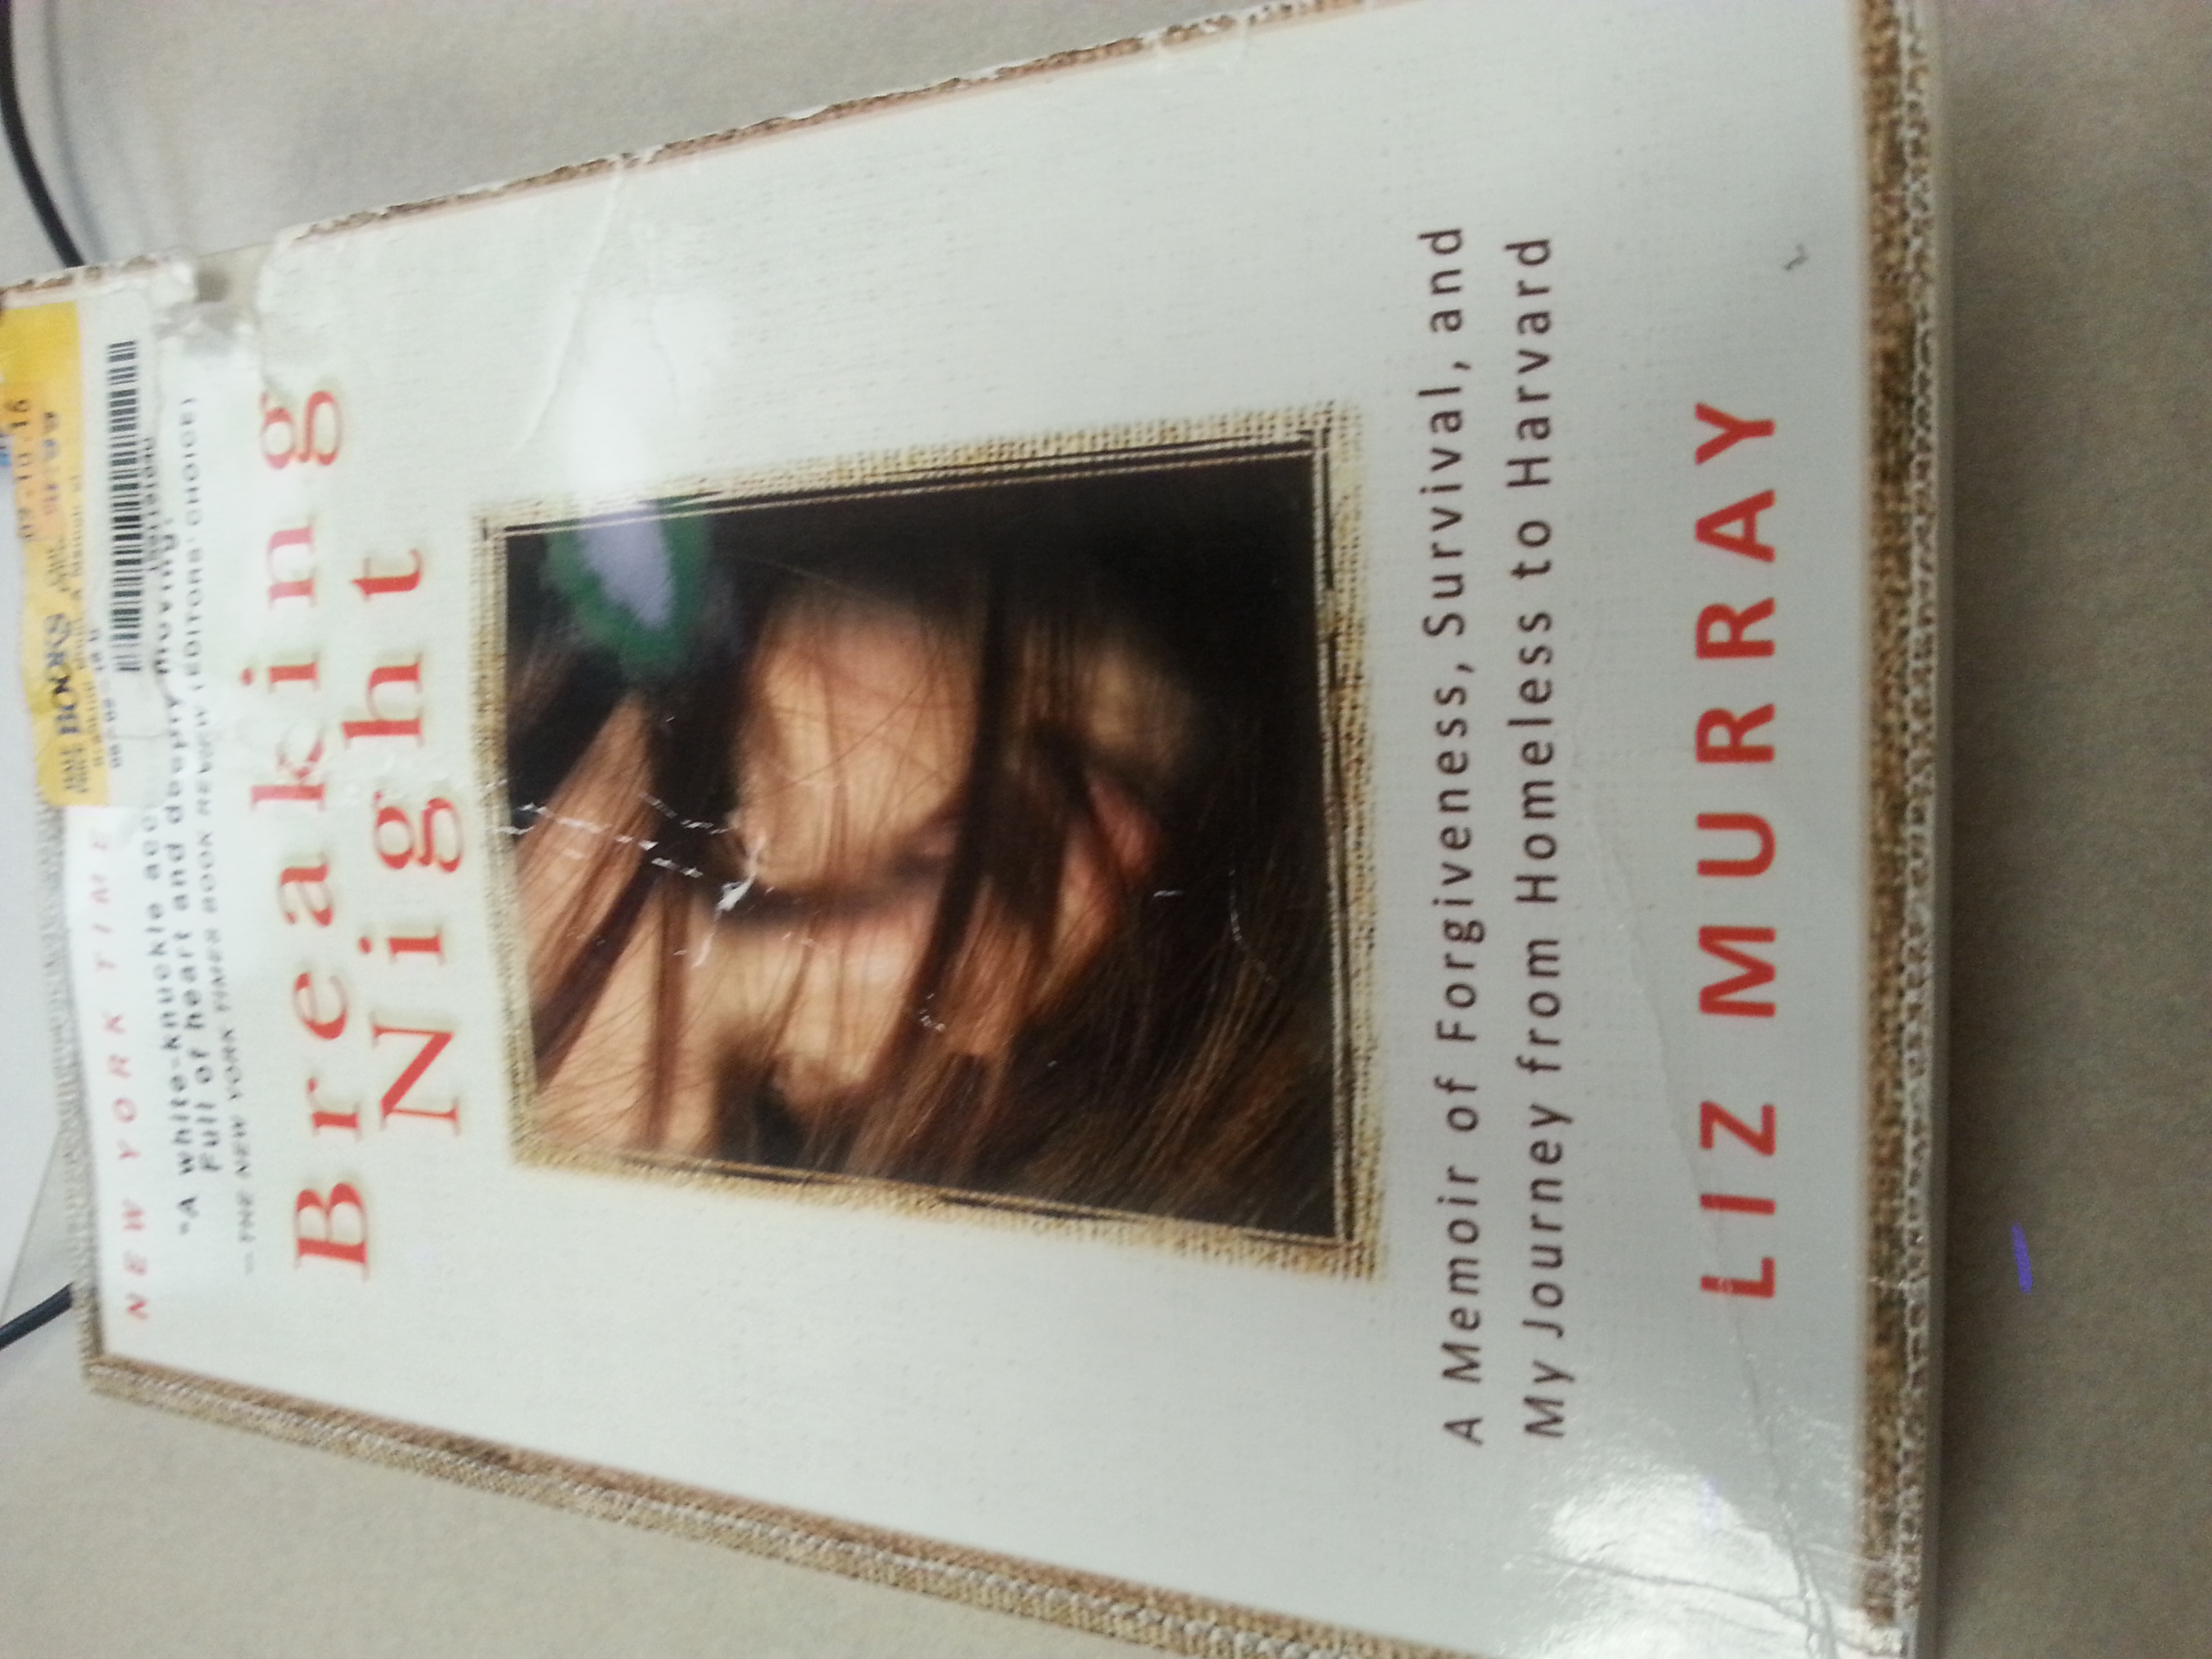 Breakibg Night by Liz Murray. great book